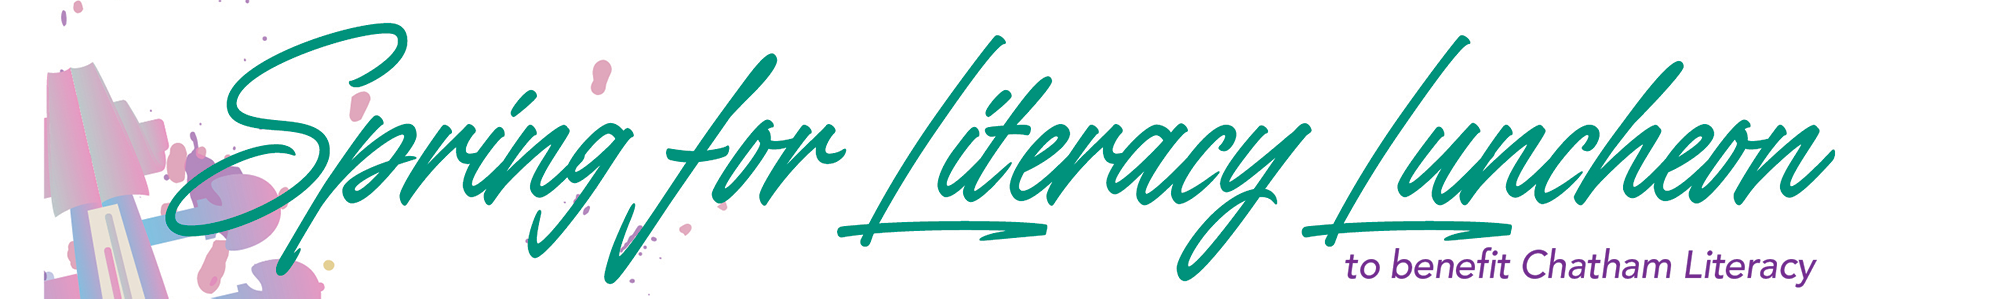 Literacy Luncheon header image